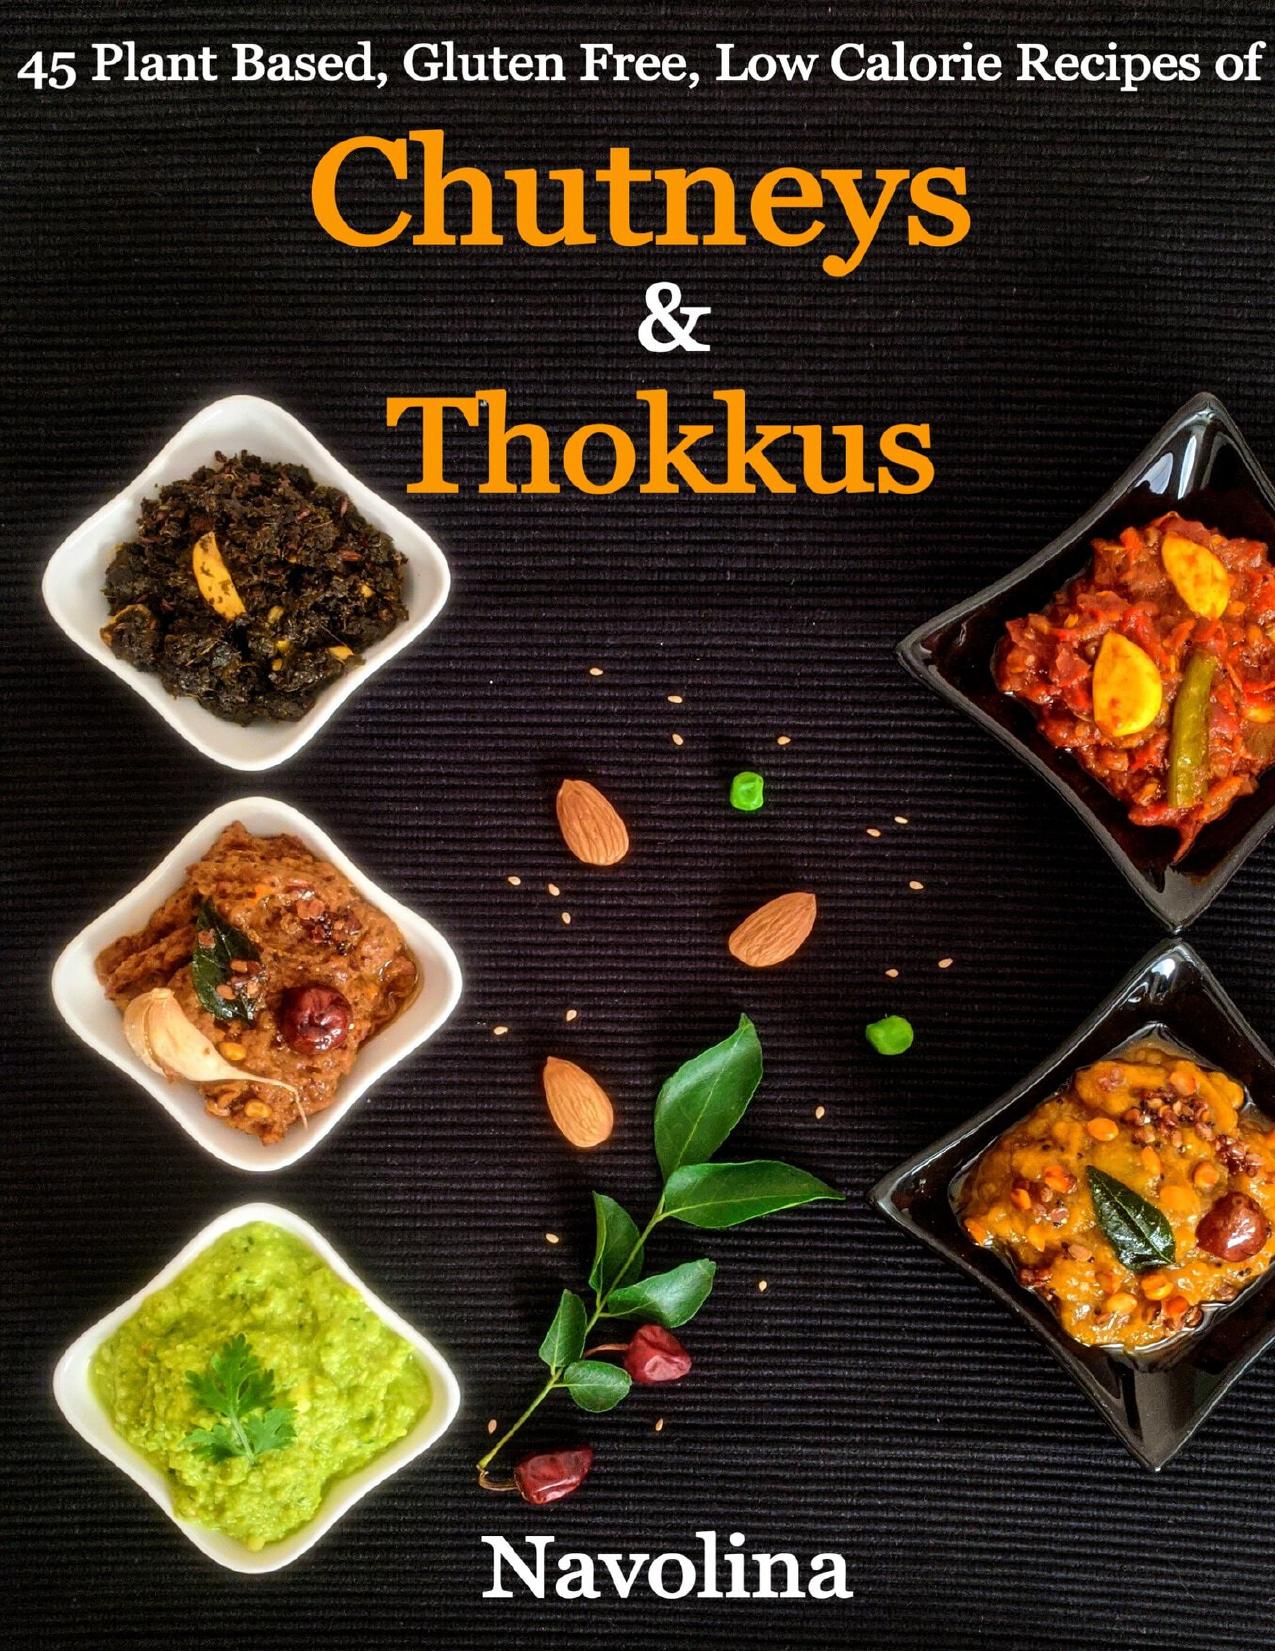 Chutneys & Thokkus: 45 Plant Based, Gluten Free, Low Calorie Recipes by Dr. Navolina